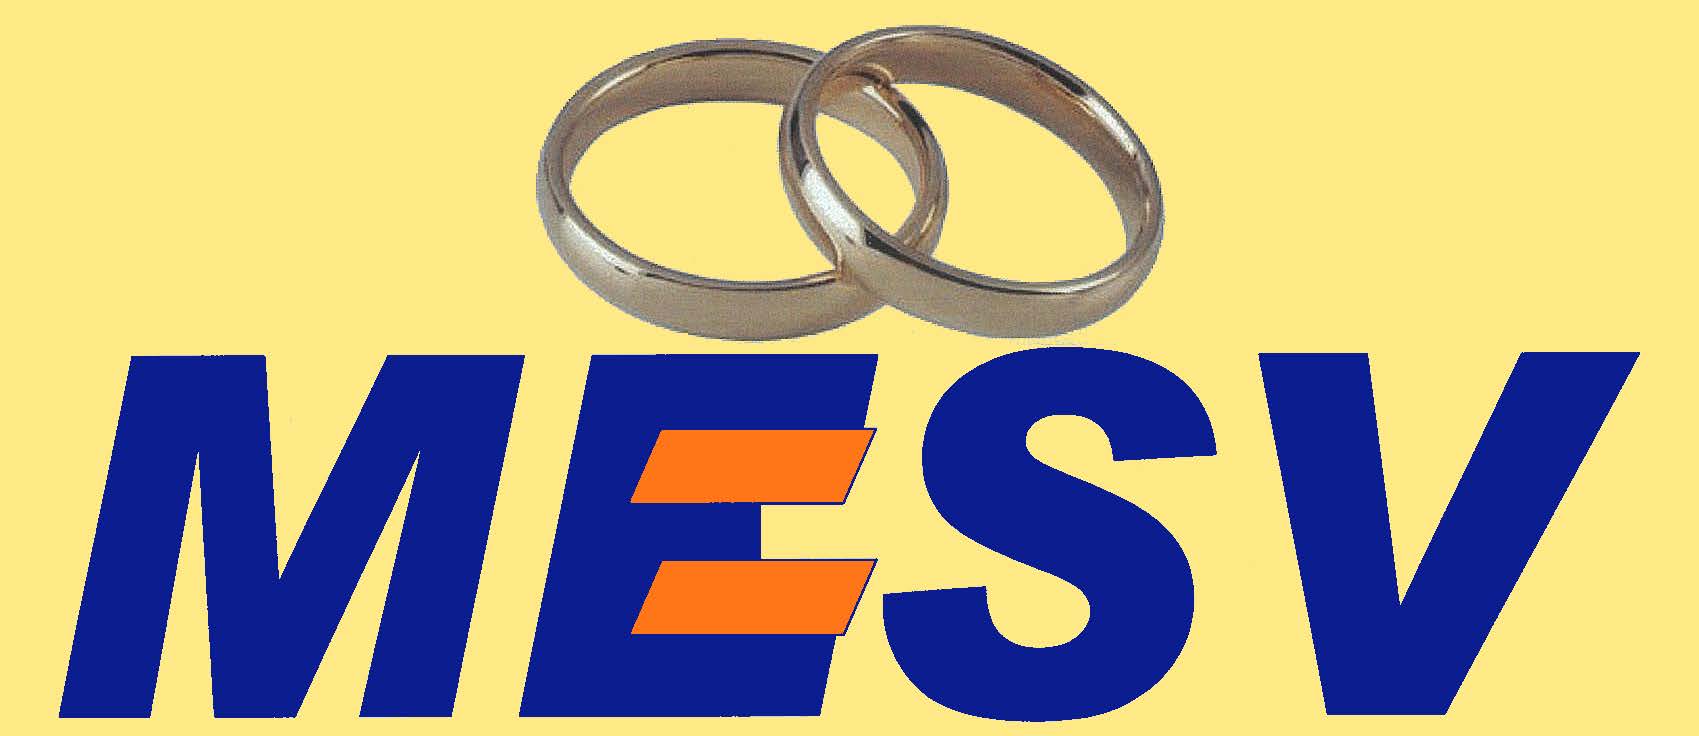 marriage equality sv logo